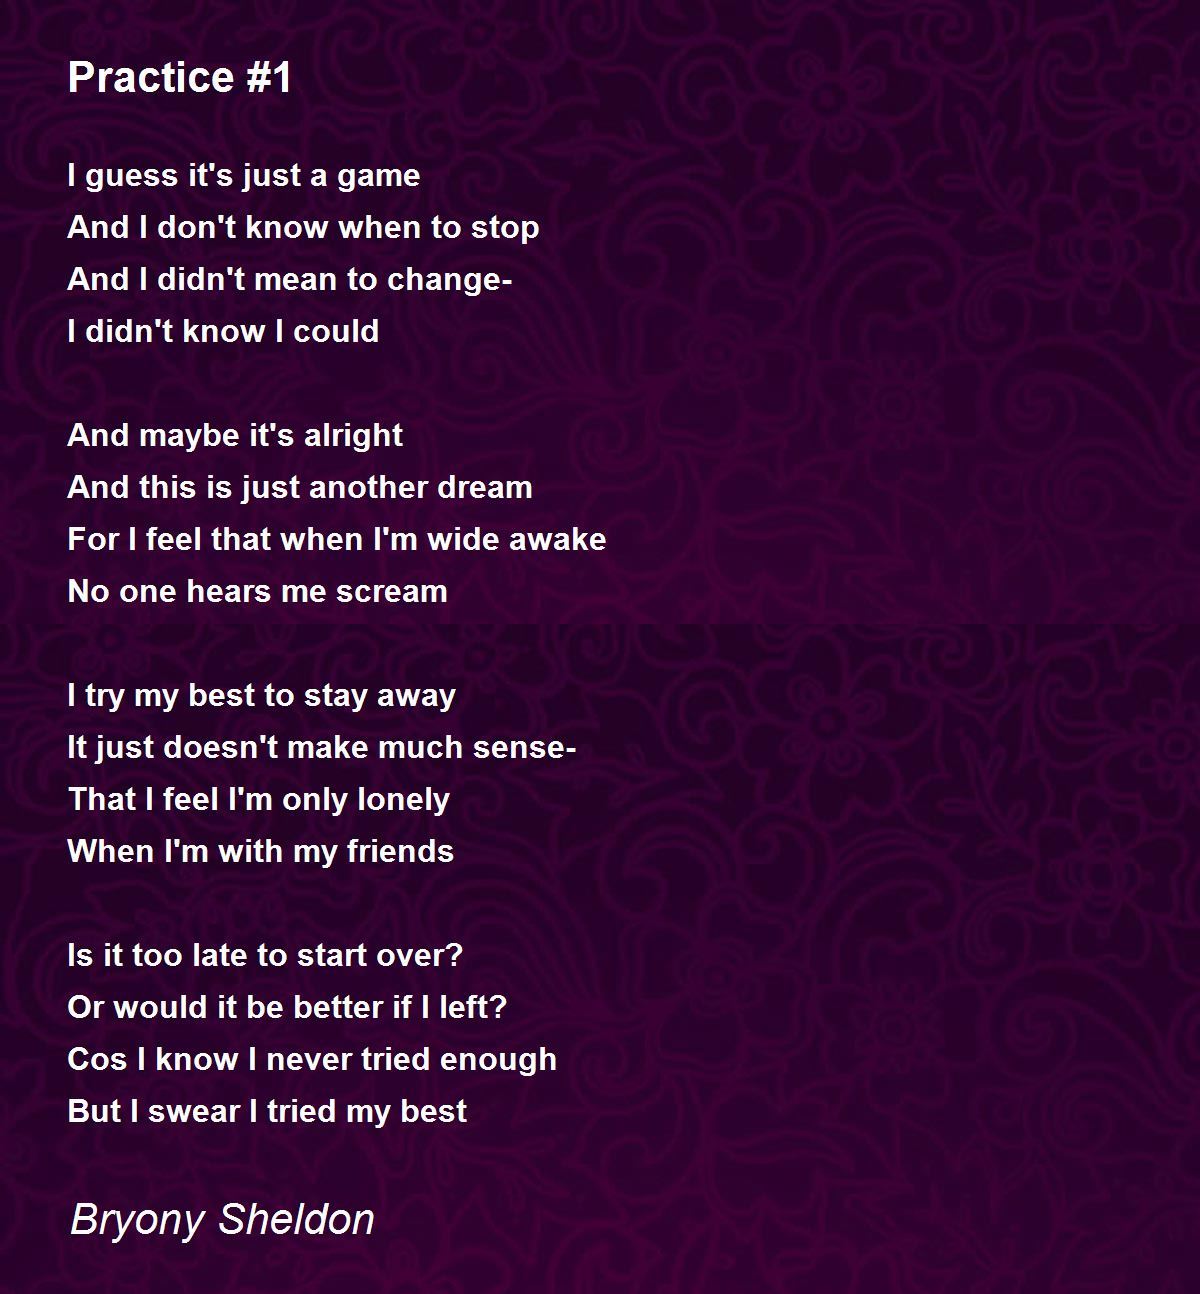 Practice #1 by Sheldon - Practice #1 Poem